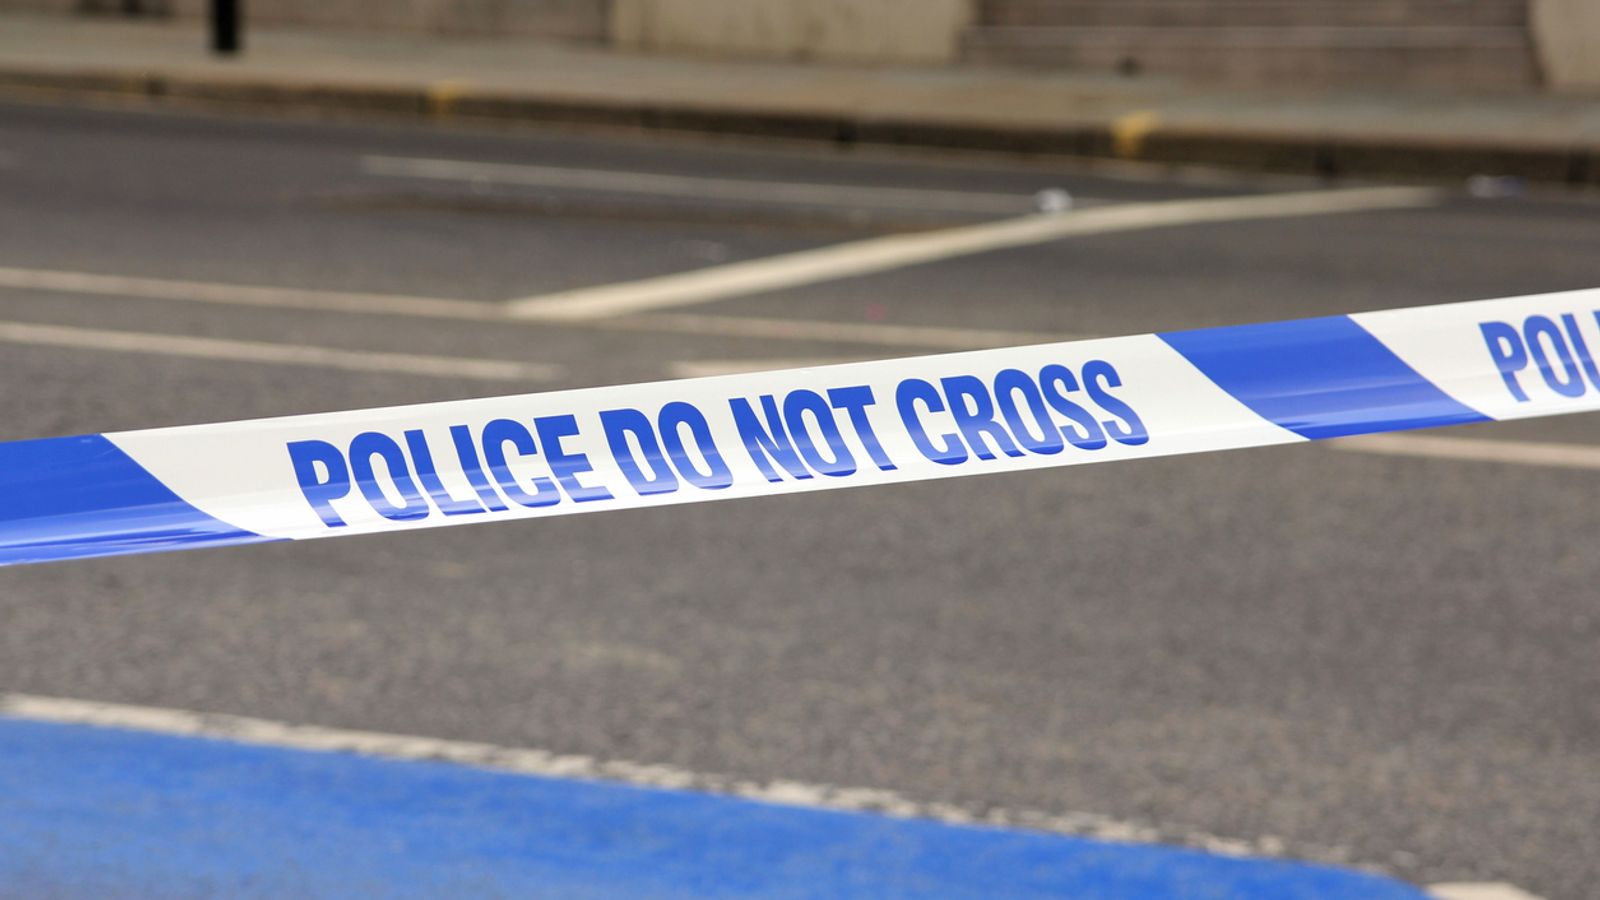 Teen girl and man killed in Telford car crash – two boys taken to hospital | UK News